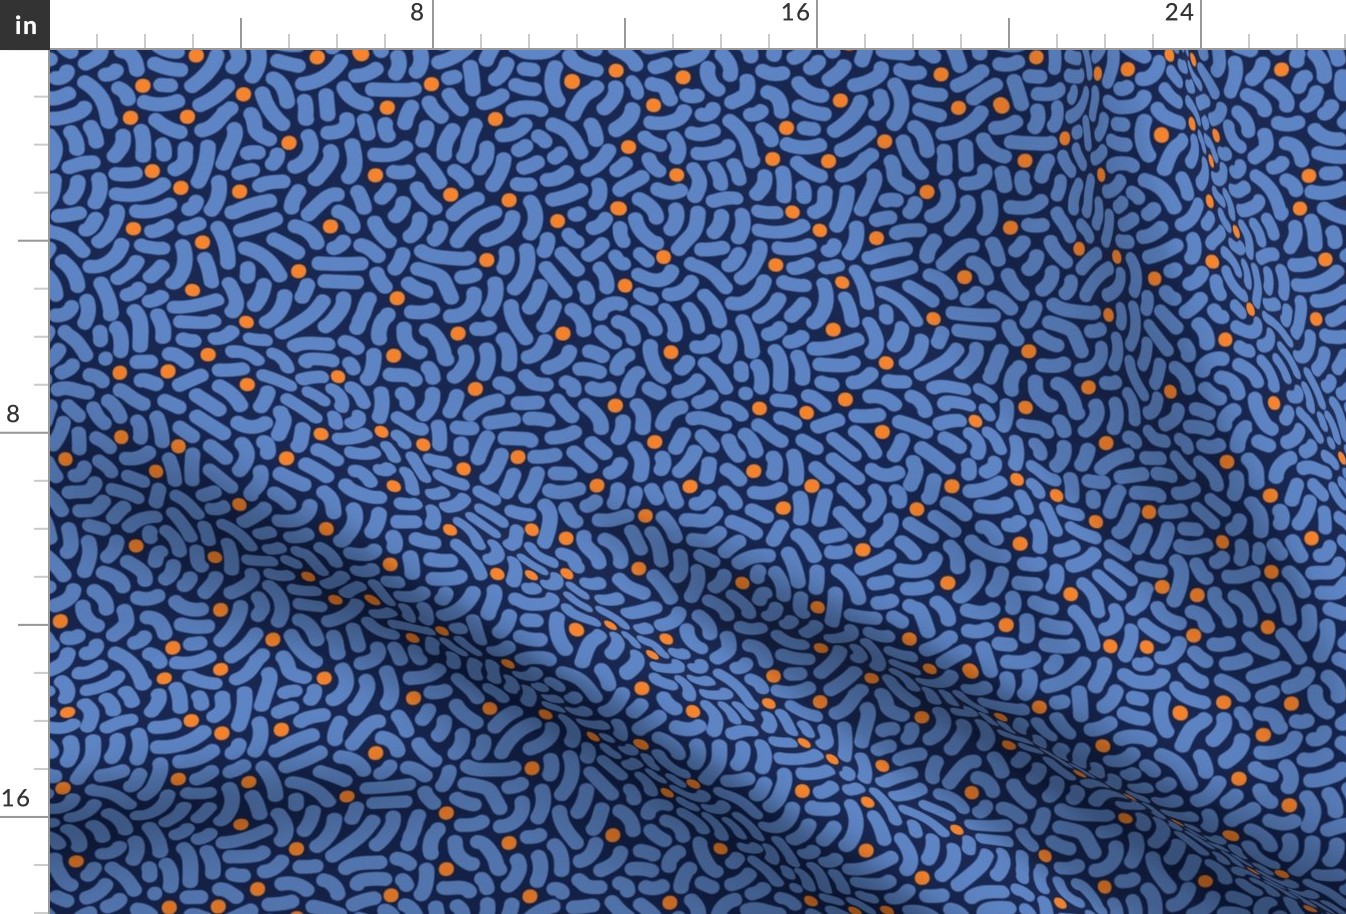 Non-Directional - Blue-Orange Splash - Abstract Shapes - Dark Blue bg - Small